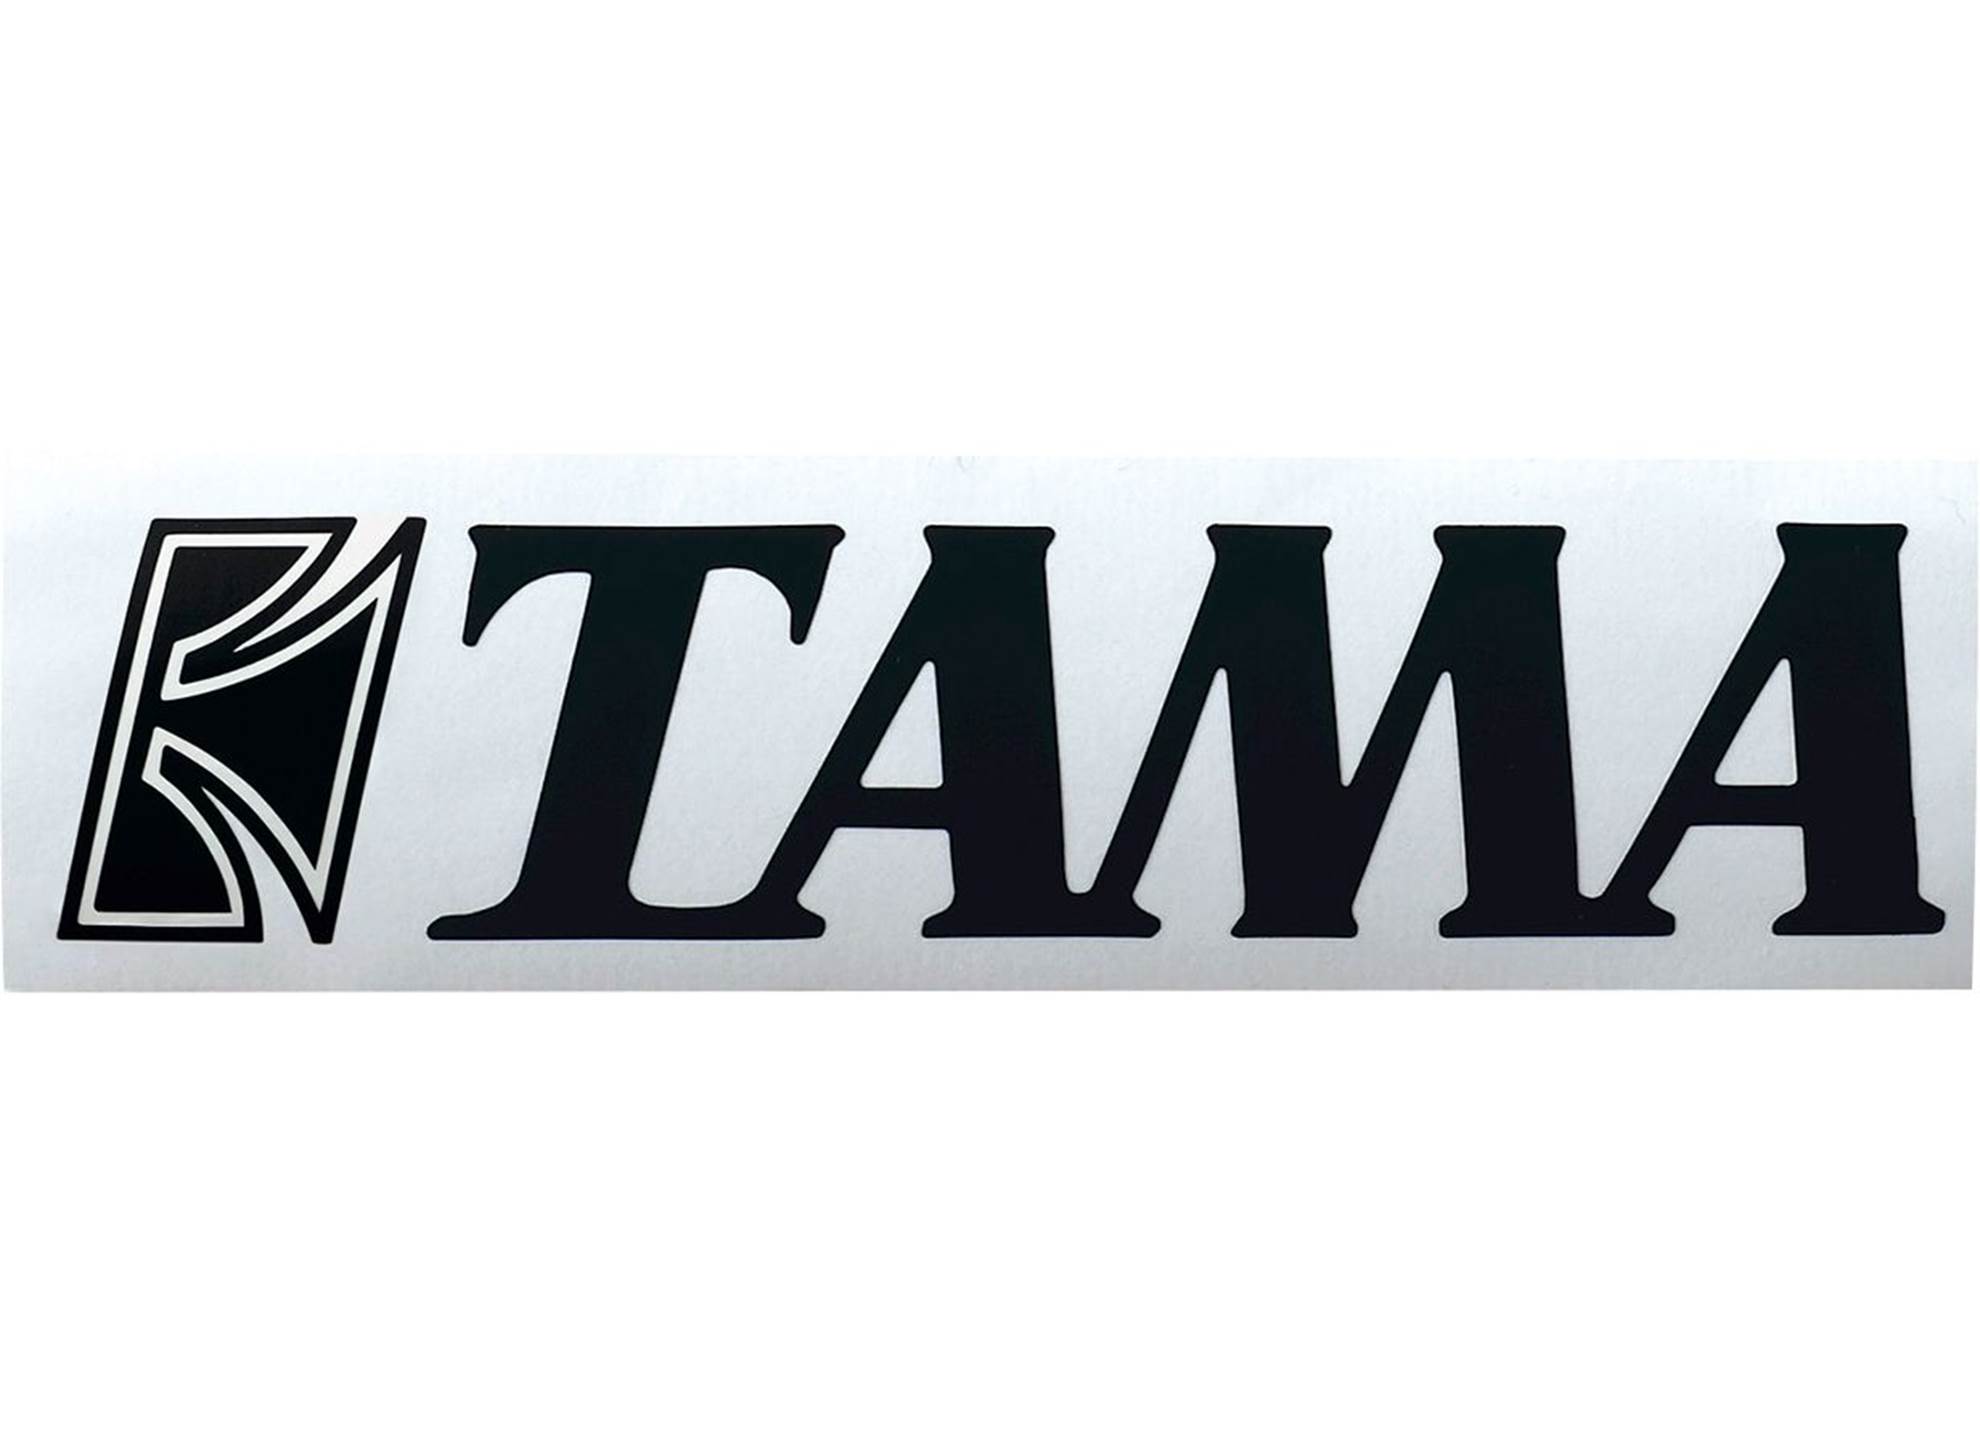 TLS70BK Tama logo dekal Black